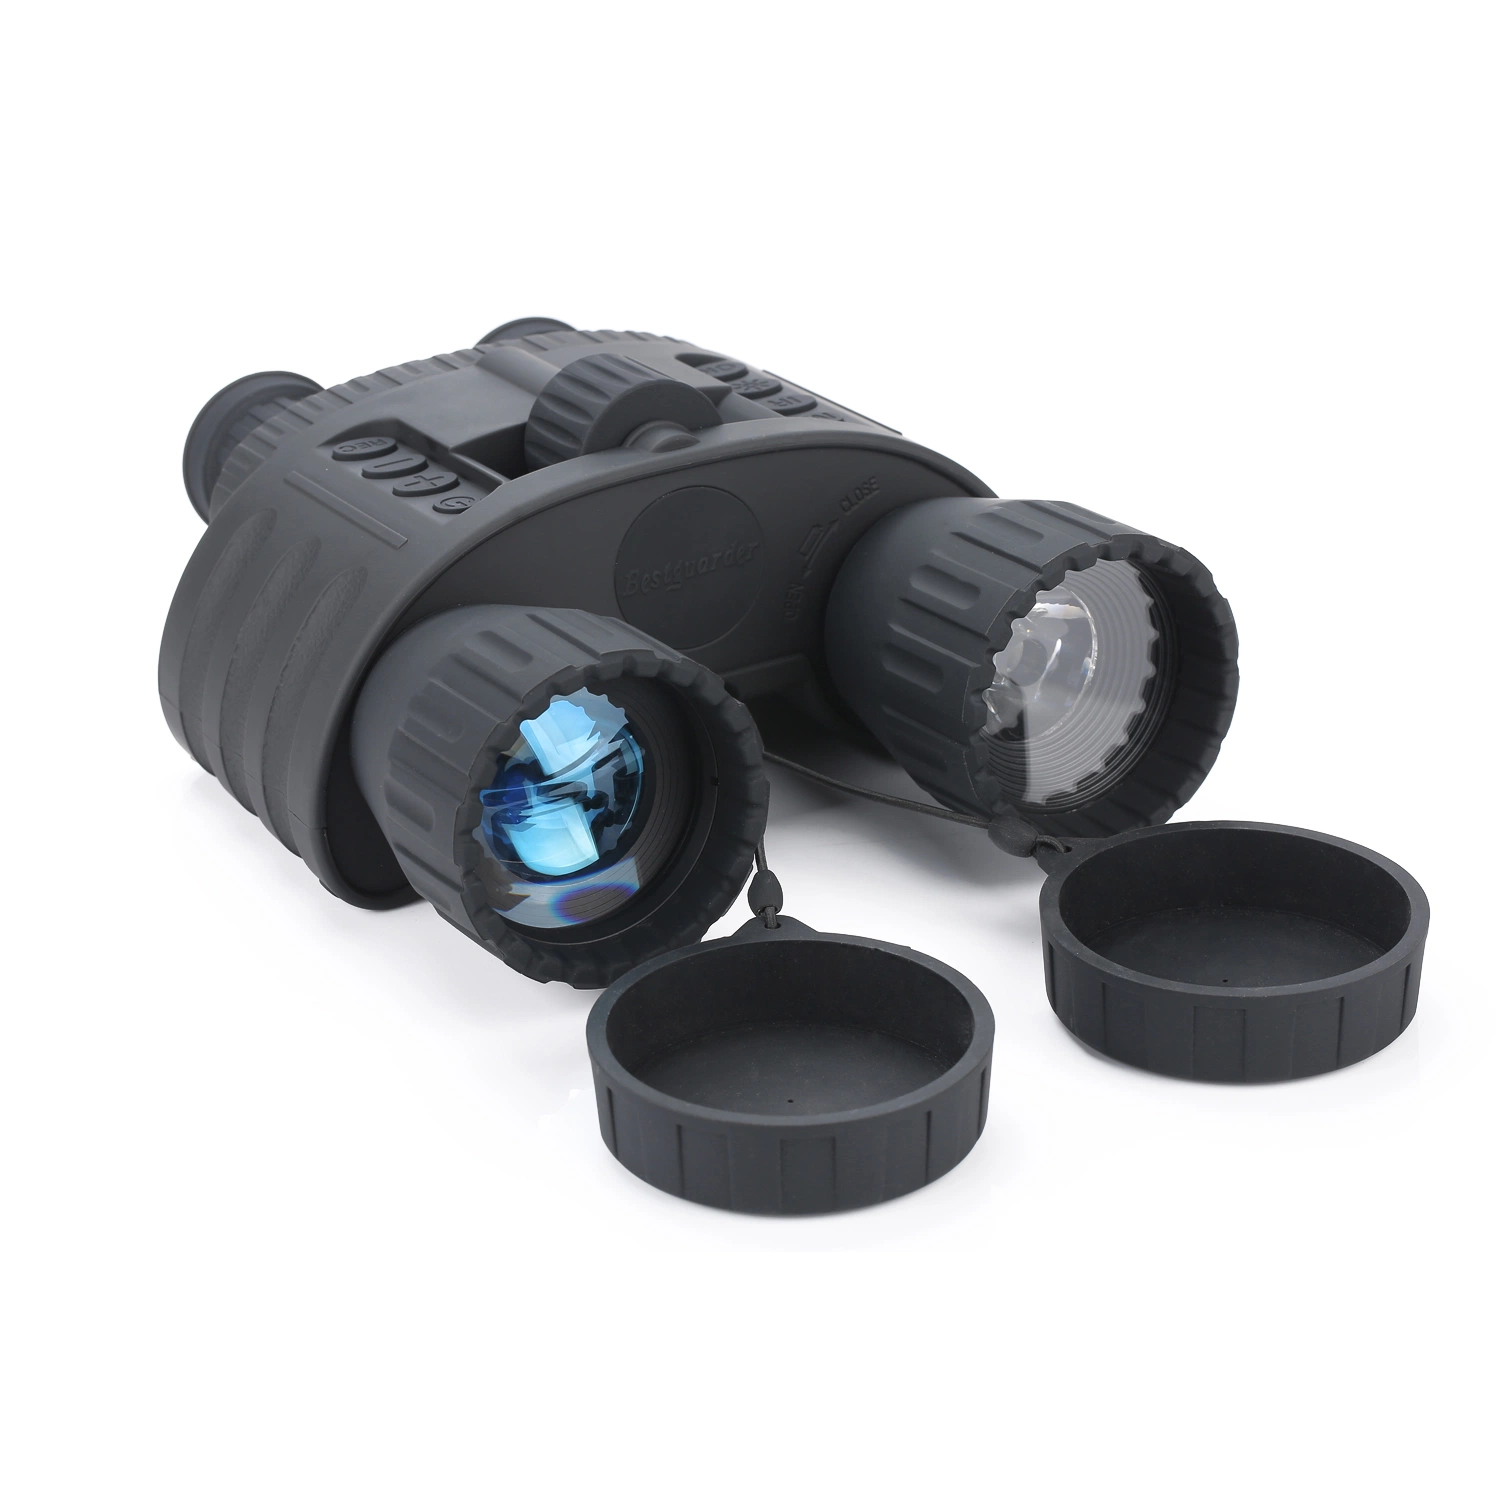 Bestguarder Wg80 4X50 Digital Night Vision Binoculars 300m Range Night Vision Goggles Optical Hunting Product (wg80)